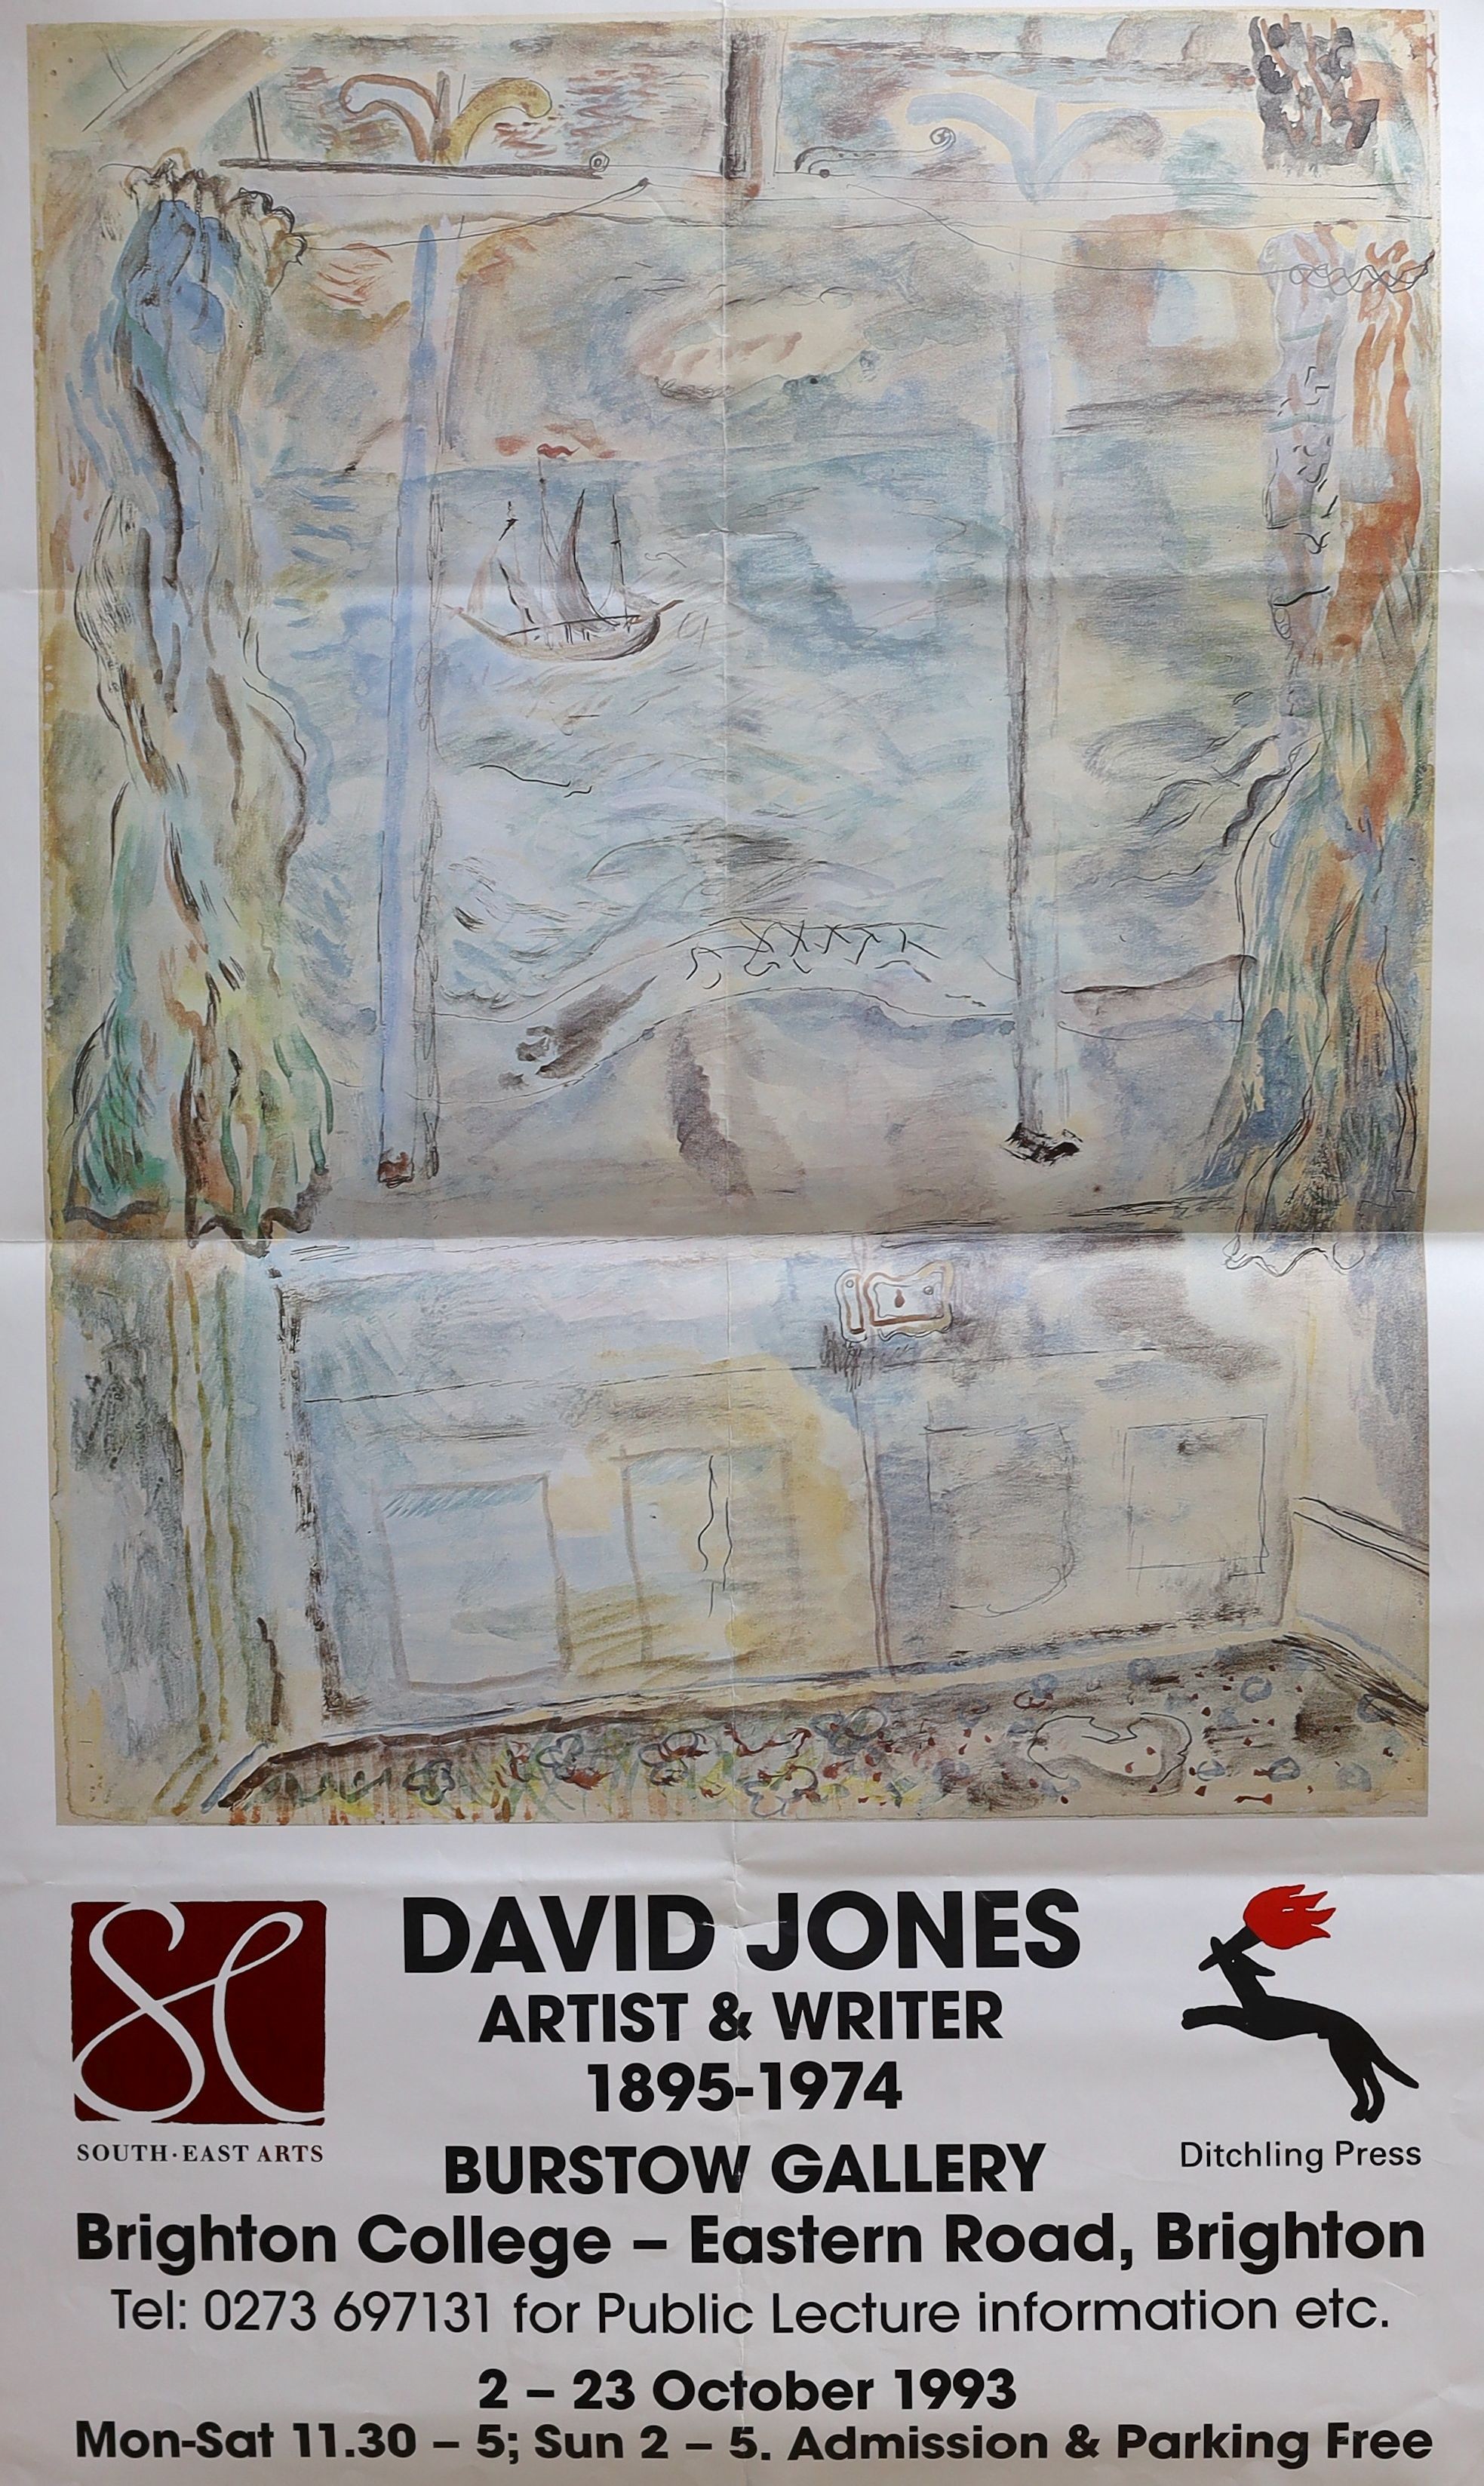 David Jones (1895-1974), wood engraving, 'DJ & HP Mounted on Pegasus', 28/60, 13 x 10cm, unframed, with a 1993 David Jones Exhibition poster